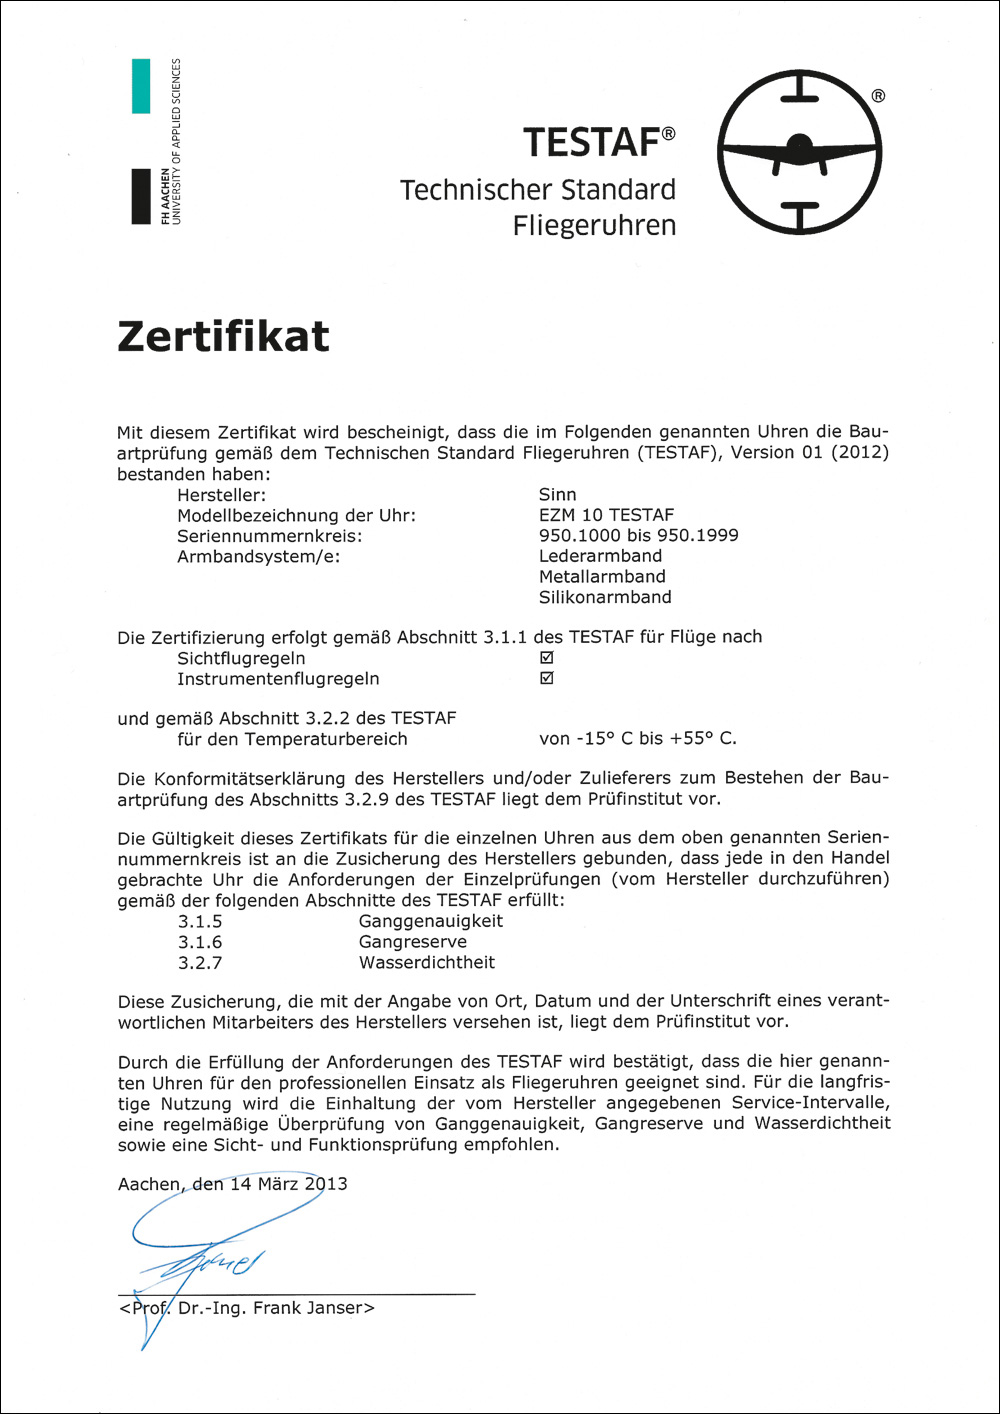 030 SINN 的证书 Zertifikat_EZM_10_TESTAF.jpg